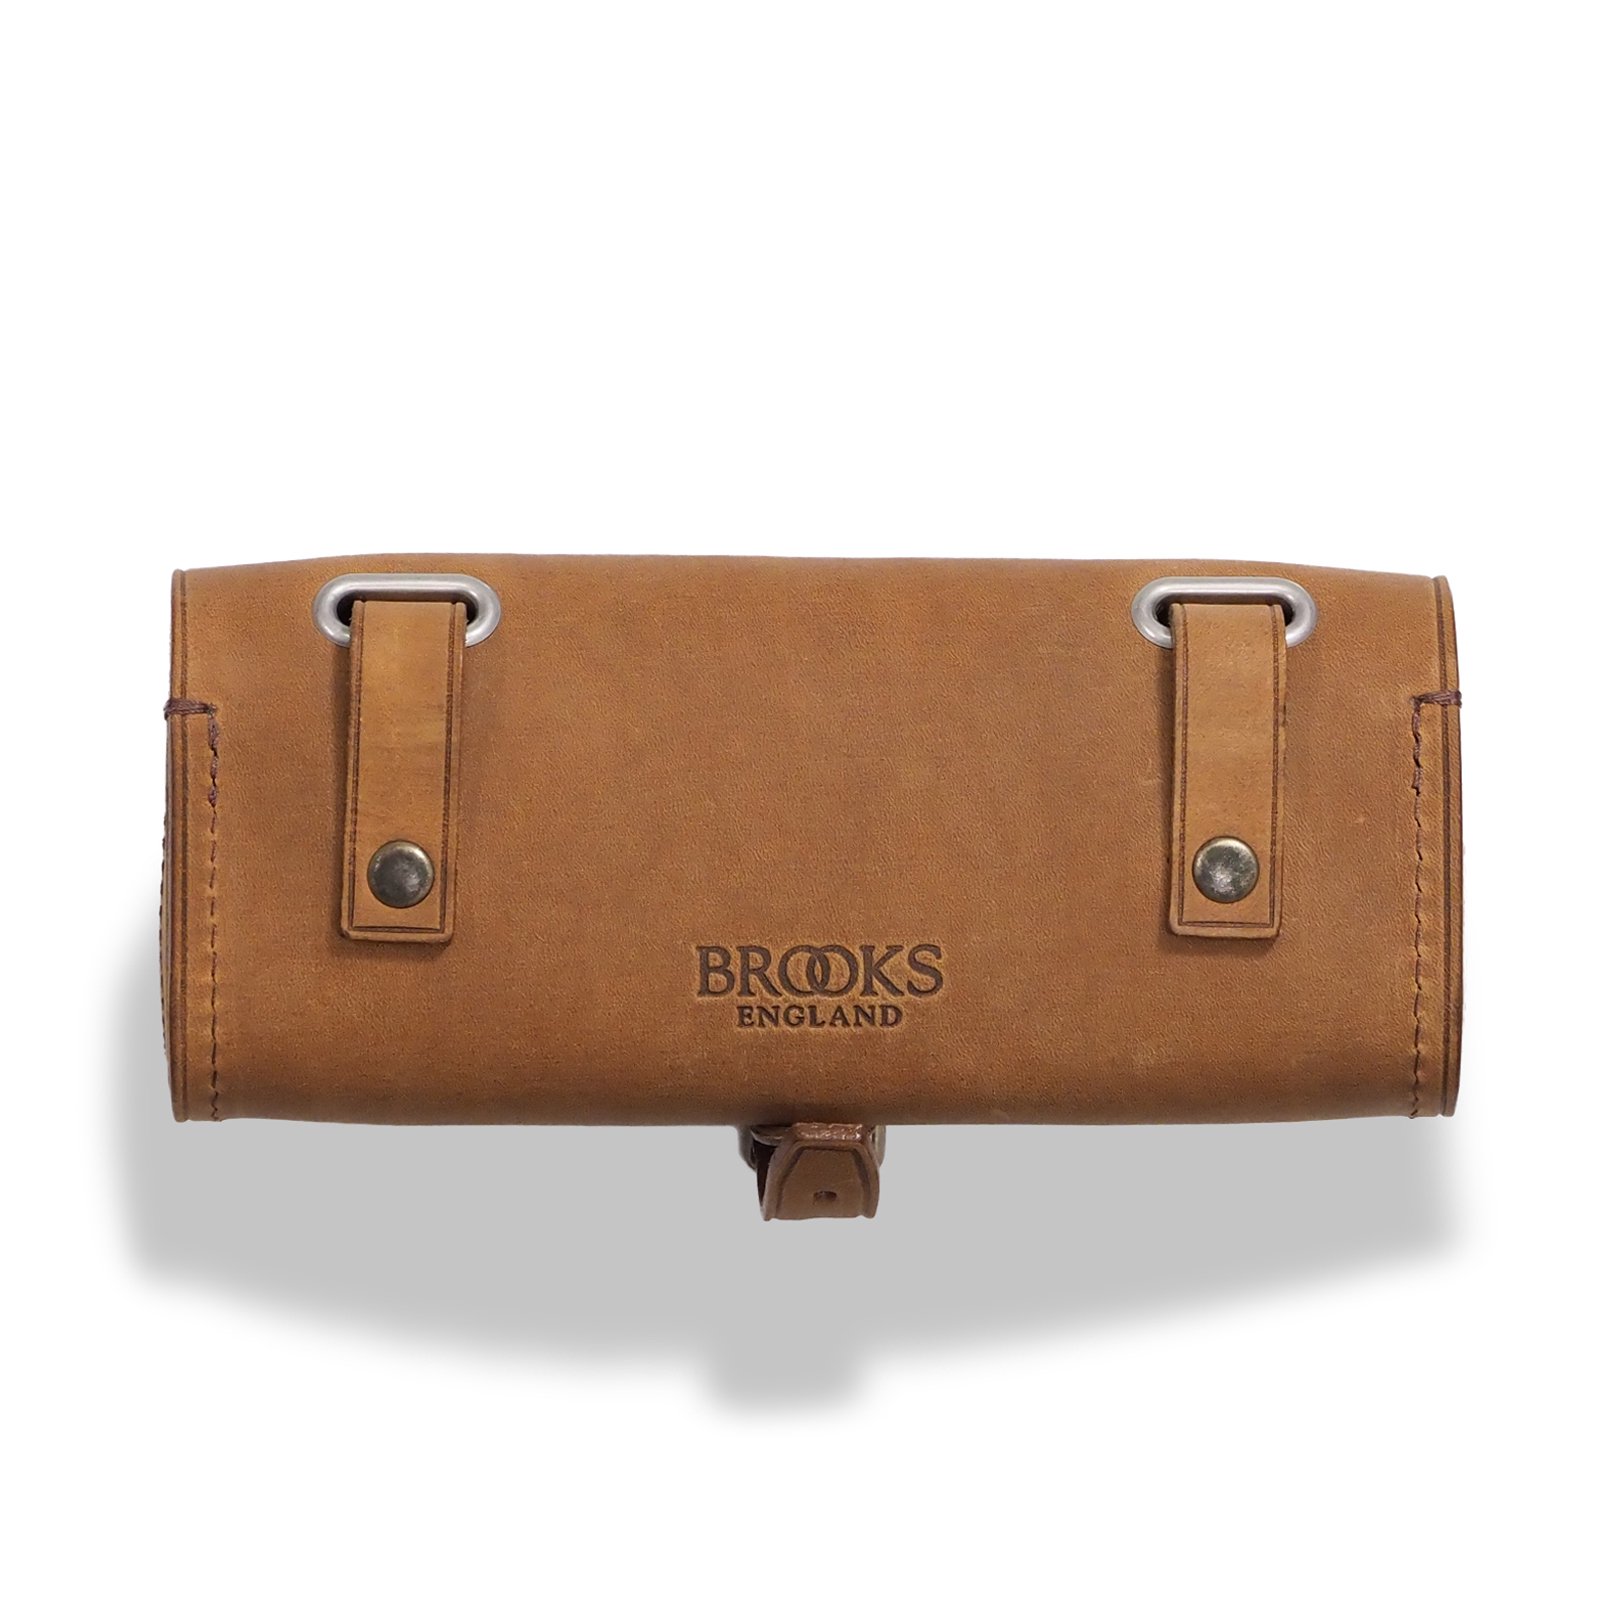 Brooks - Challenge Tool Bag | 1866年バーミンガムで創立 